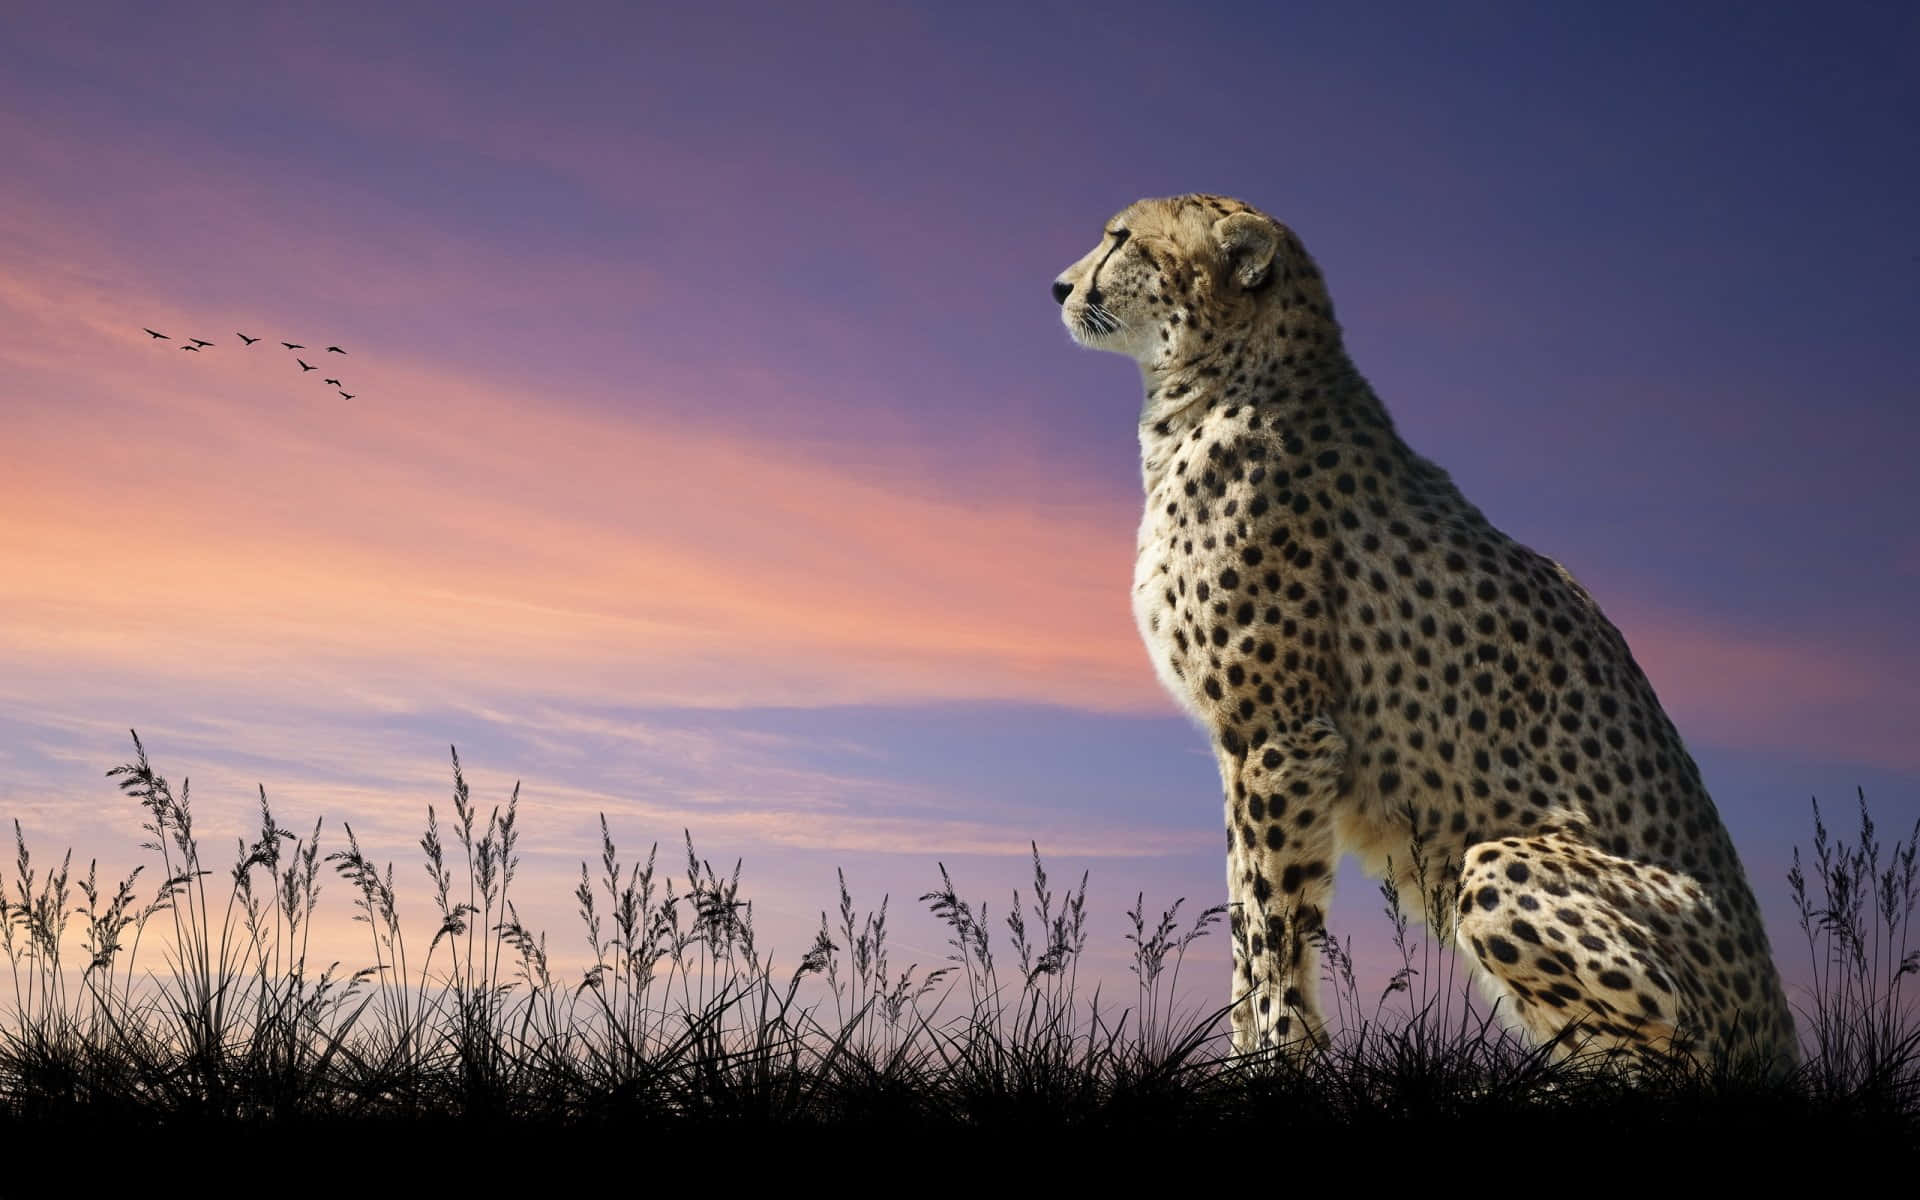 “A Cheetah Roaming Freely In Its Natural Habitat” Wallpaper